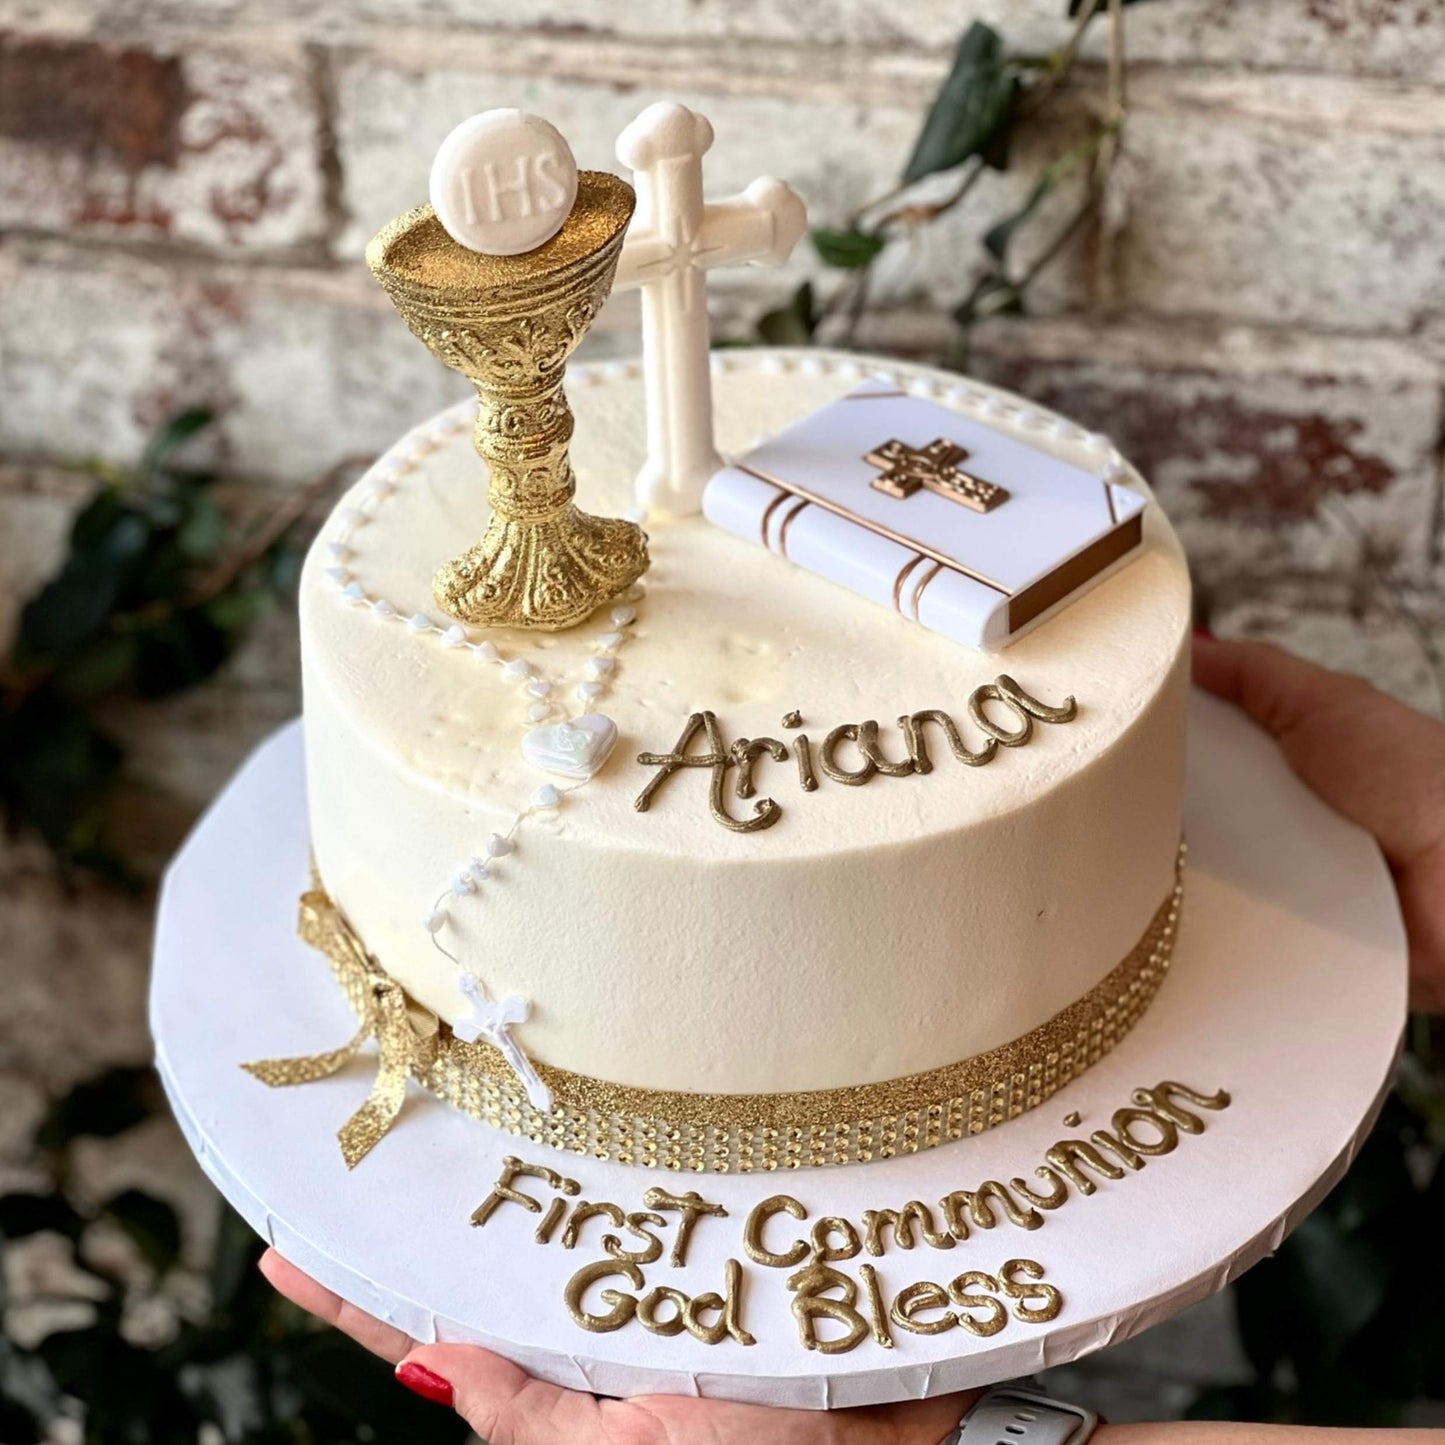 First Communion God Bless Cake